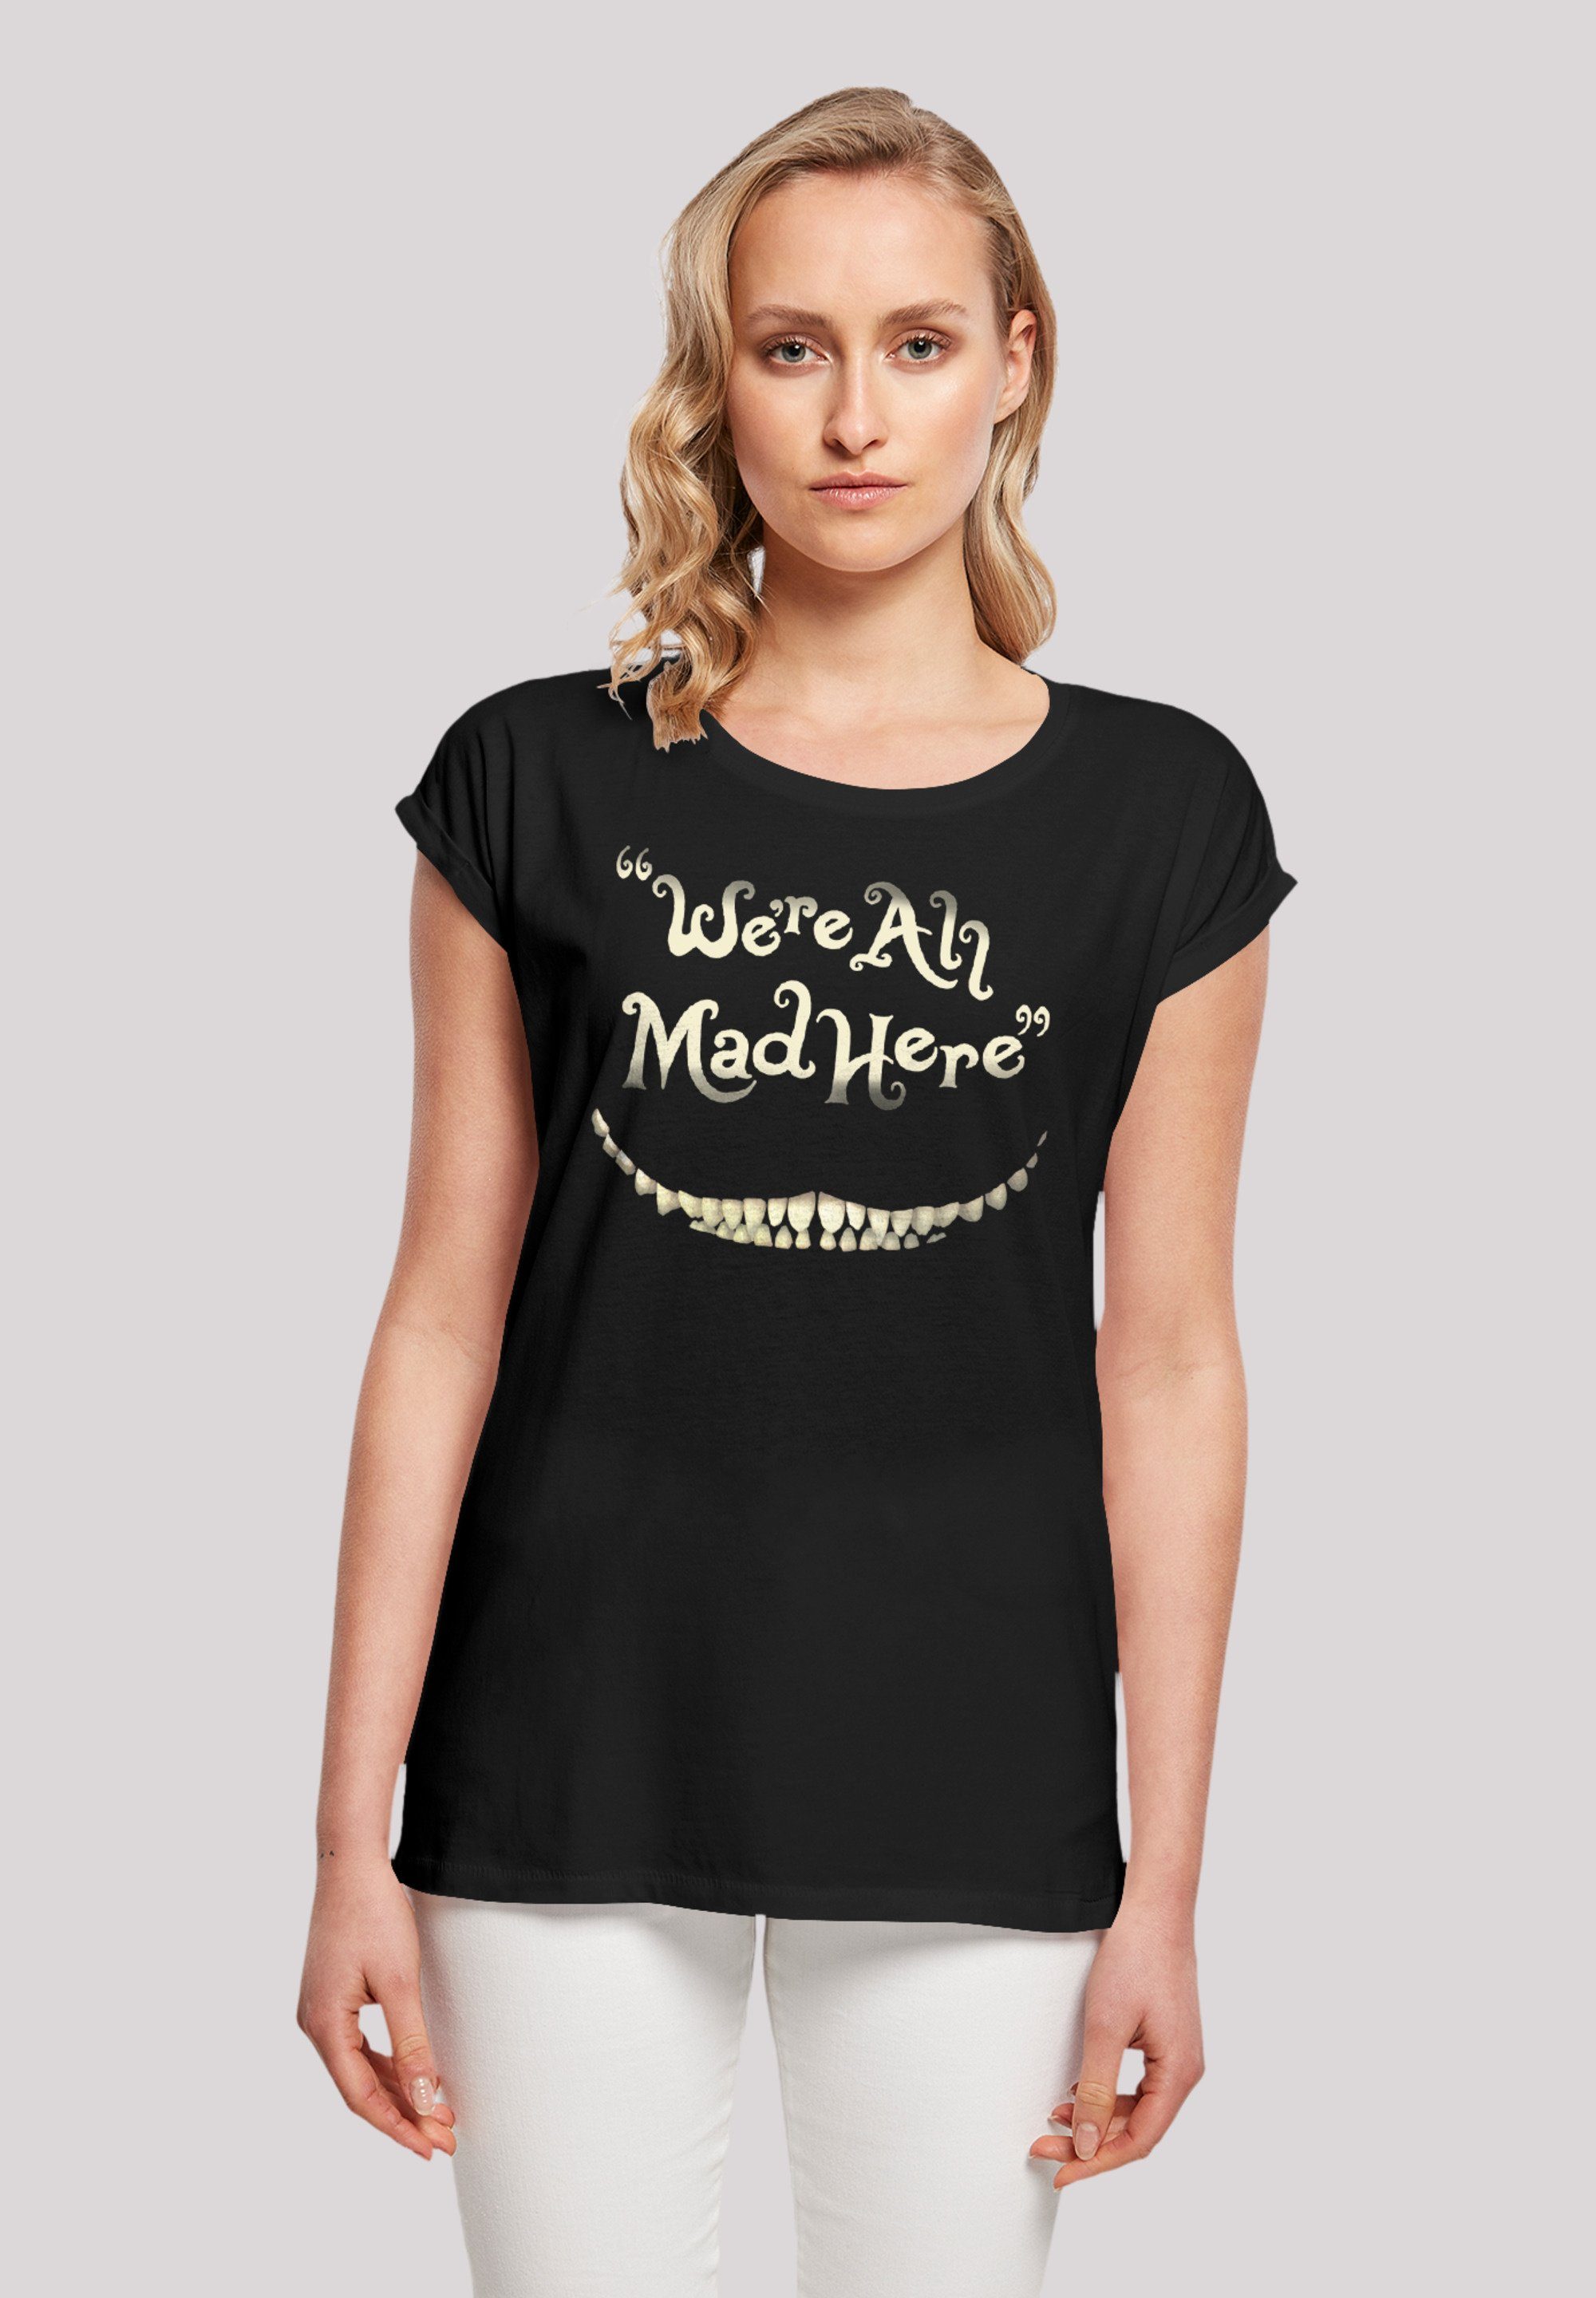 Wunderland F4NT4STIC T-Shirt Premium im Here Qualität Disney Mad Alice Smile